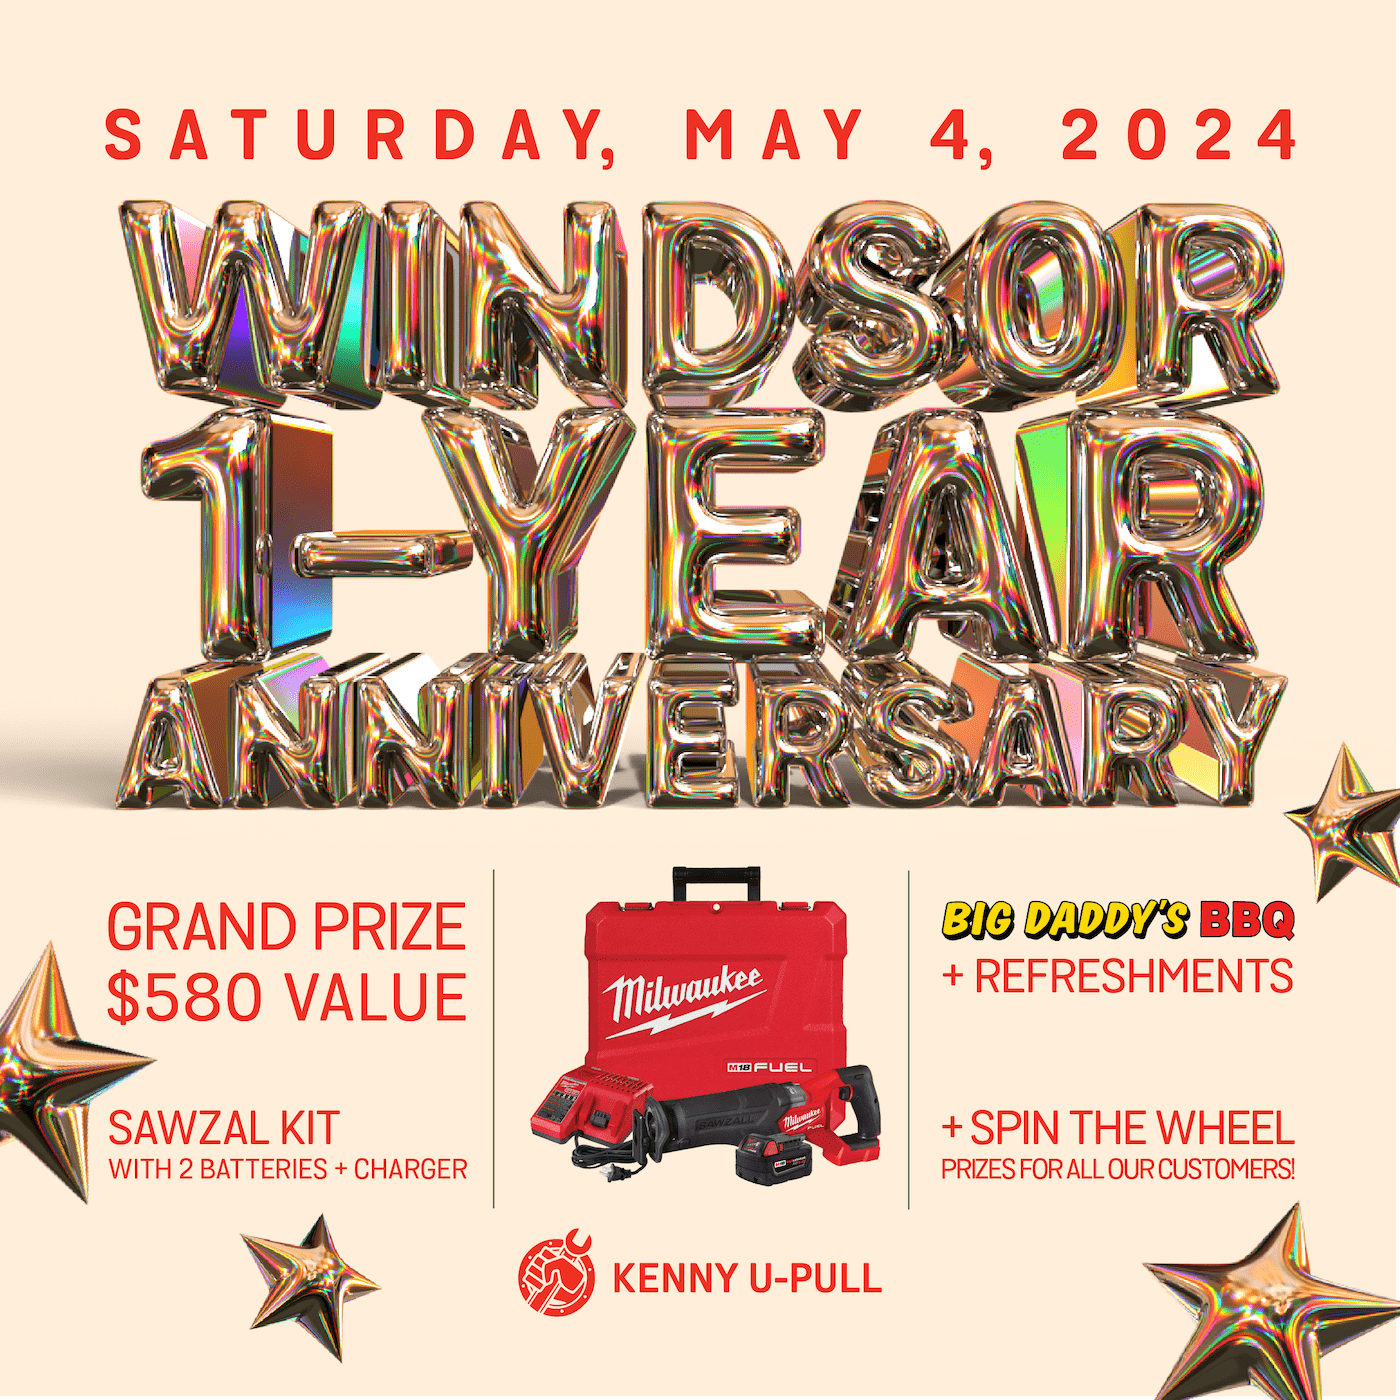 Kenny U-Pull Windsor – 1 Year Anniversary